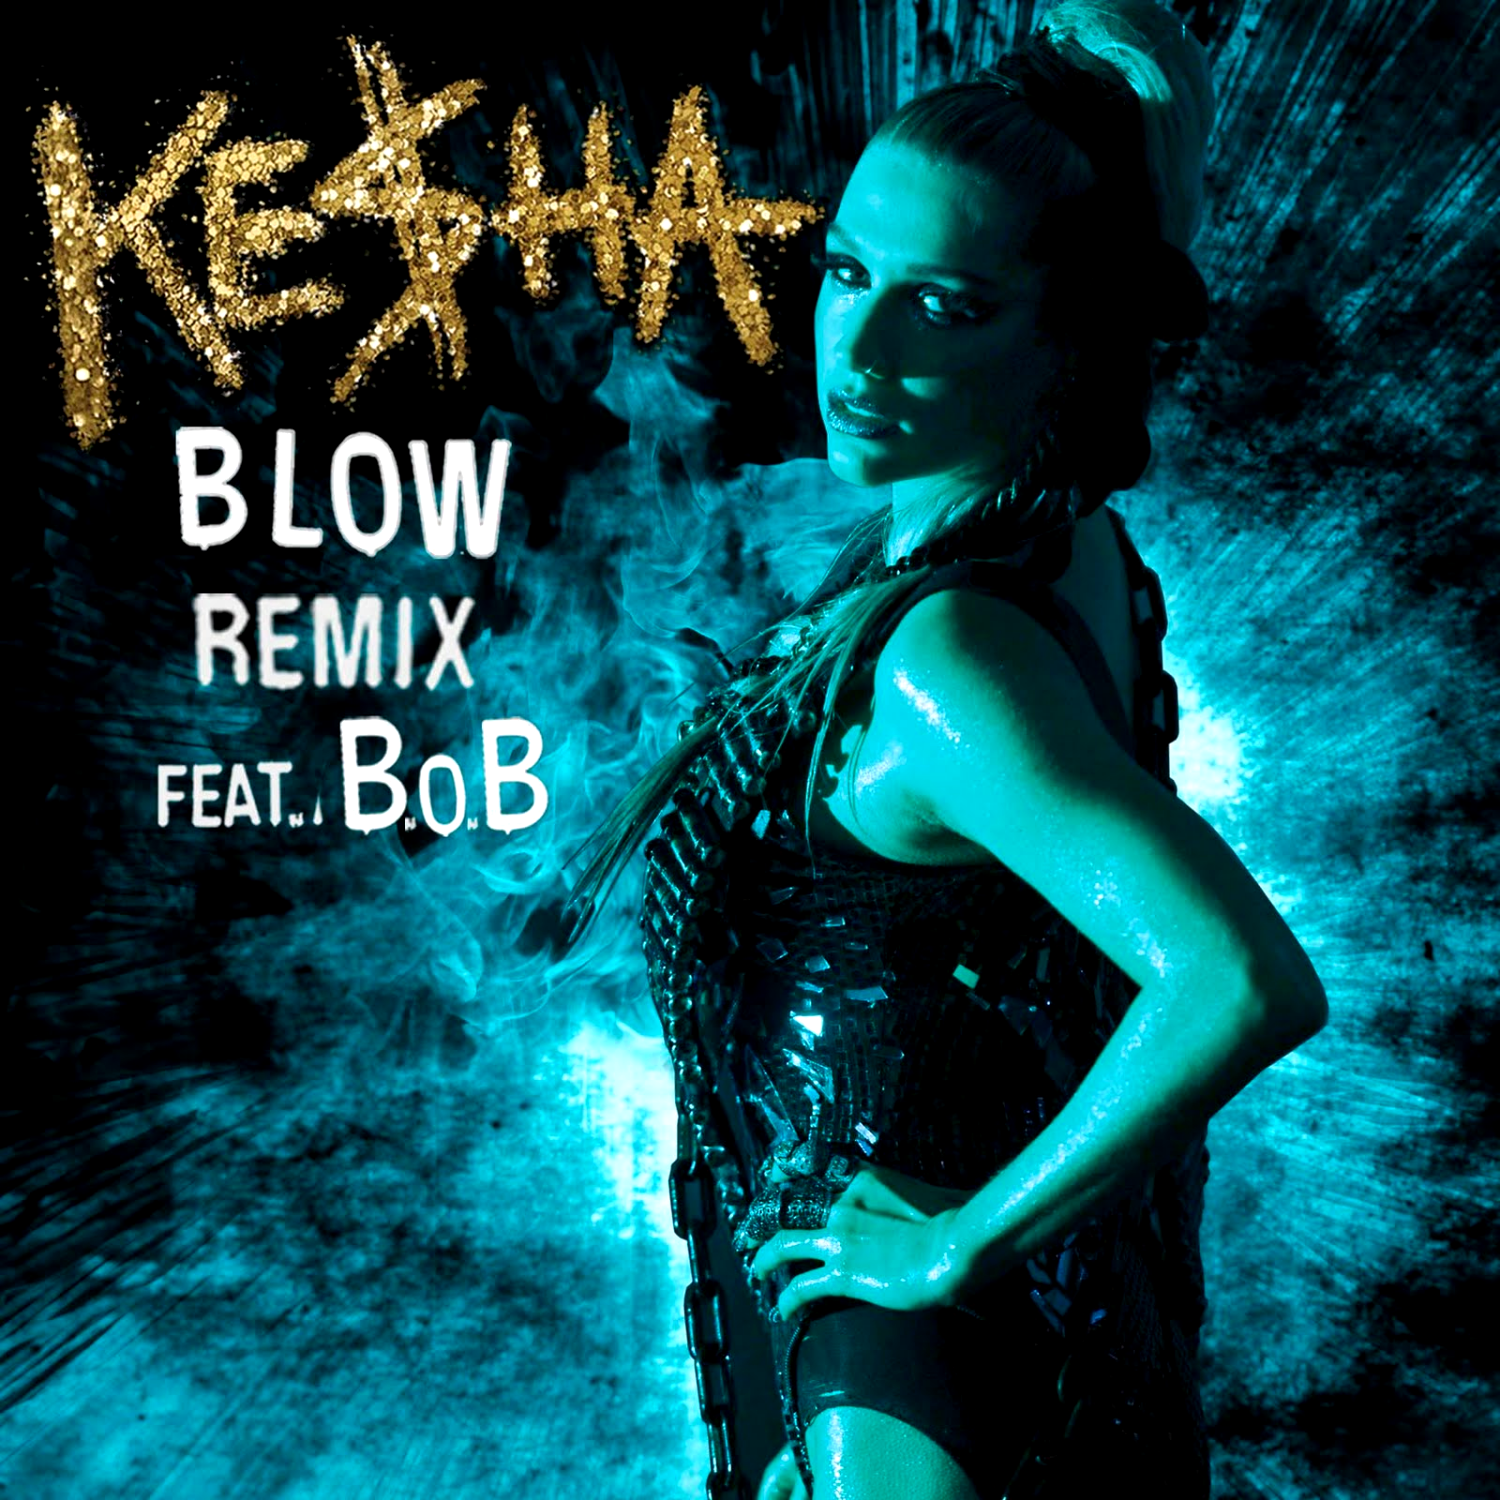 Kesha ft. featuring B.o.B Blow - Remix cover artwork